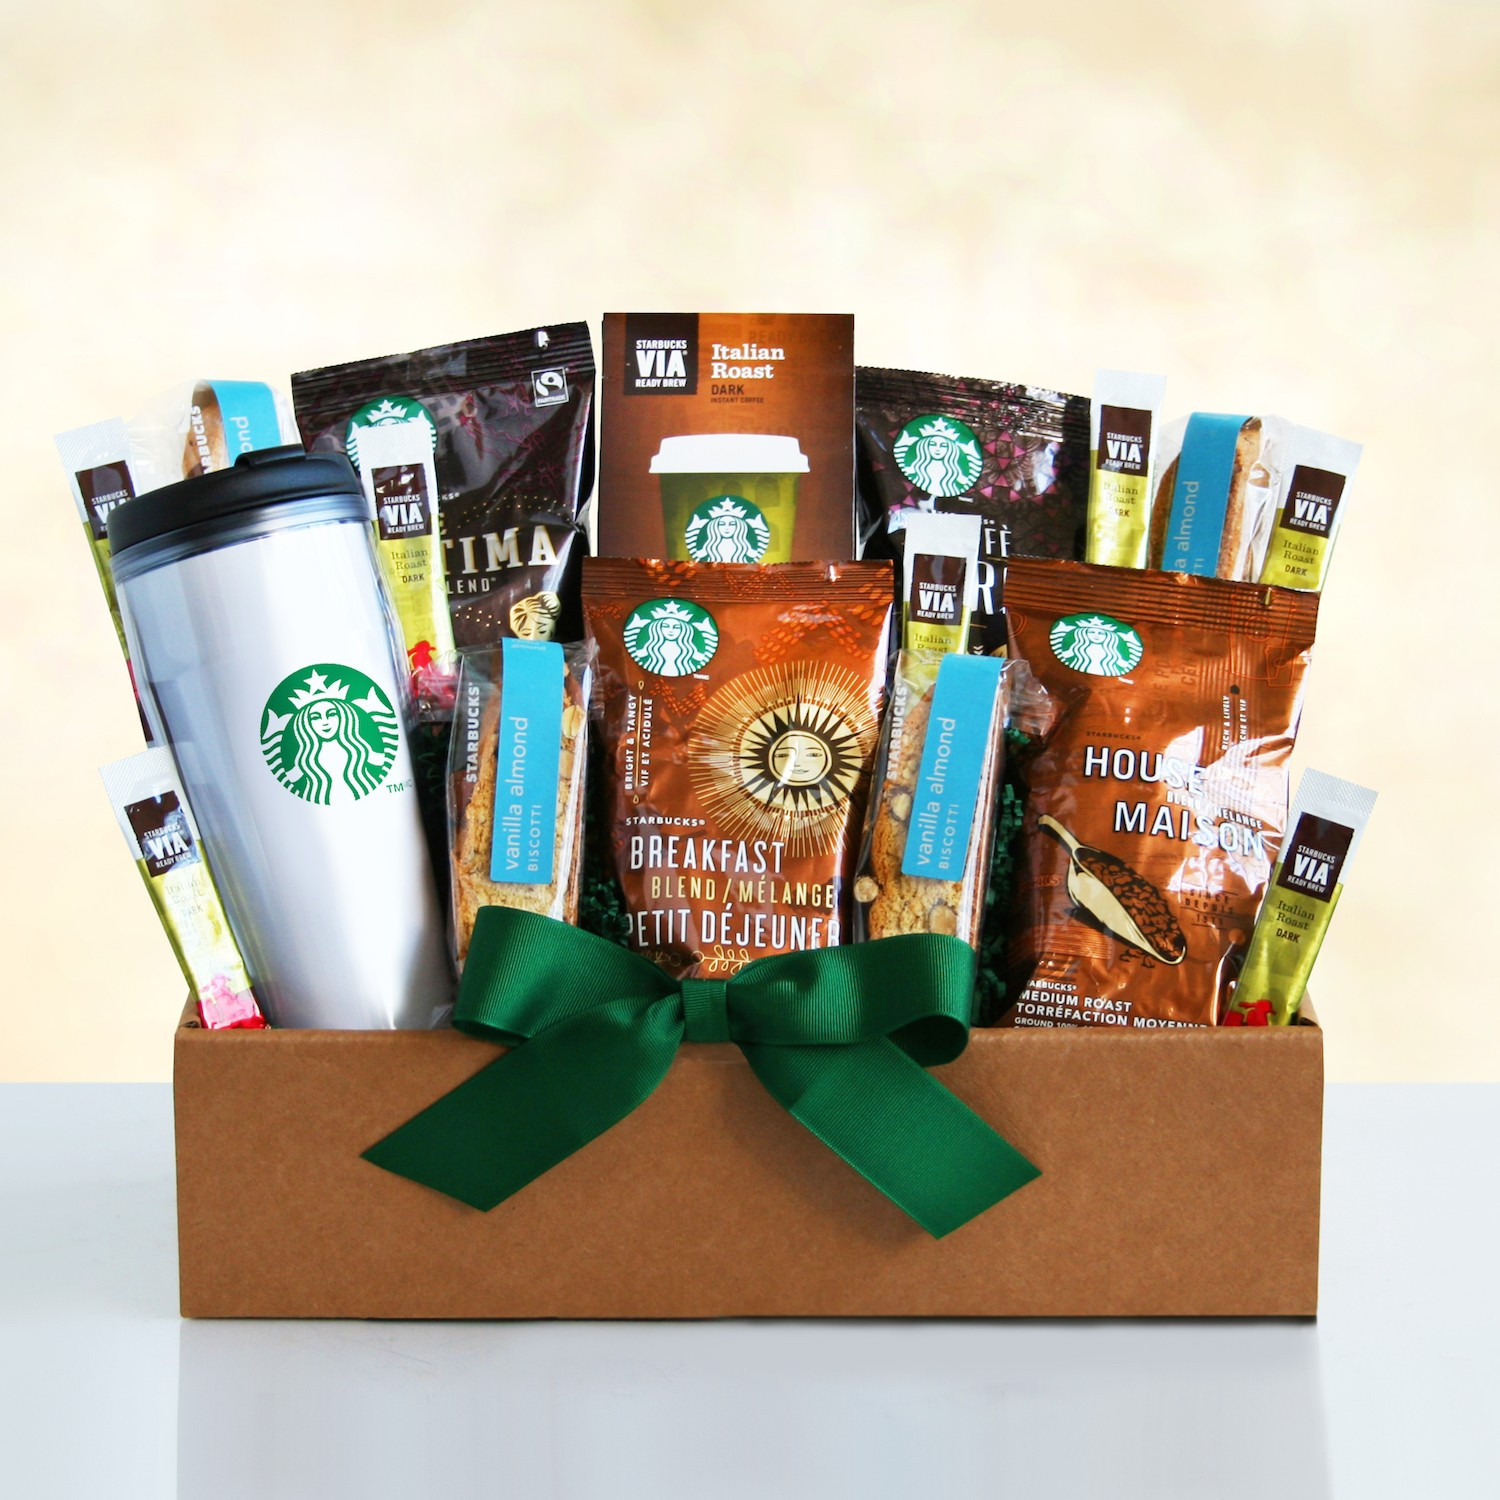 Best ideas about Starbucks Gift Basket Ideas
. Save or Pin Splendid Starbucks To Go Gift Basket Gift Baskets Plus Now.